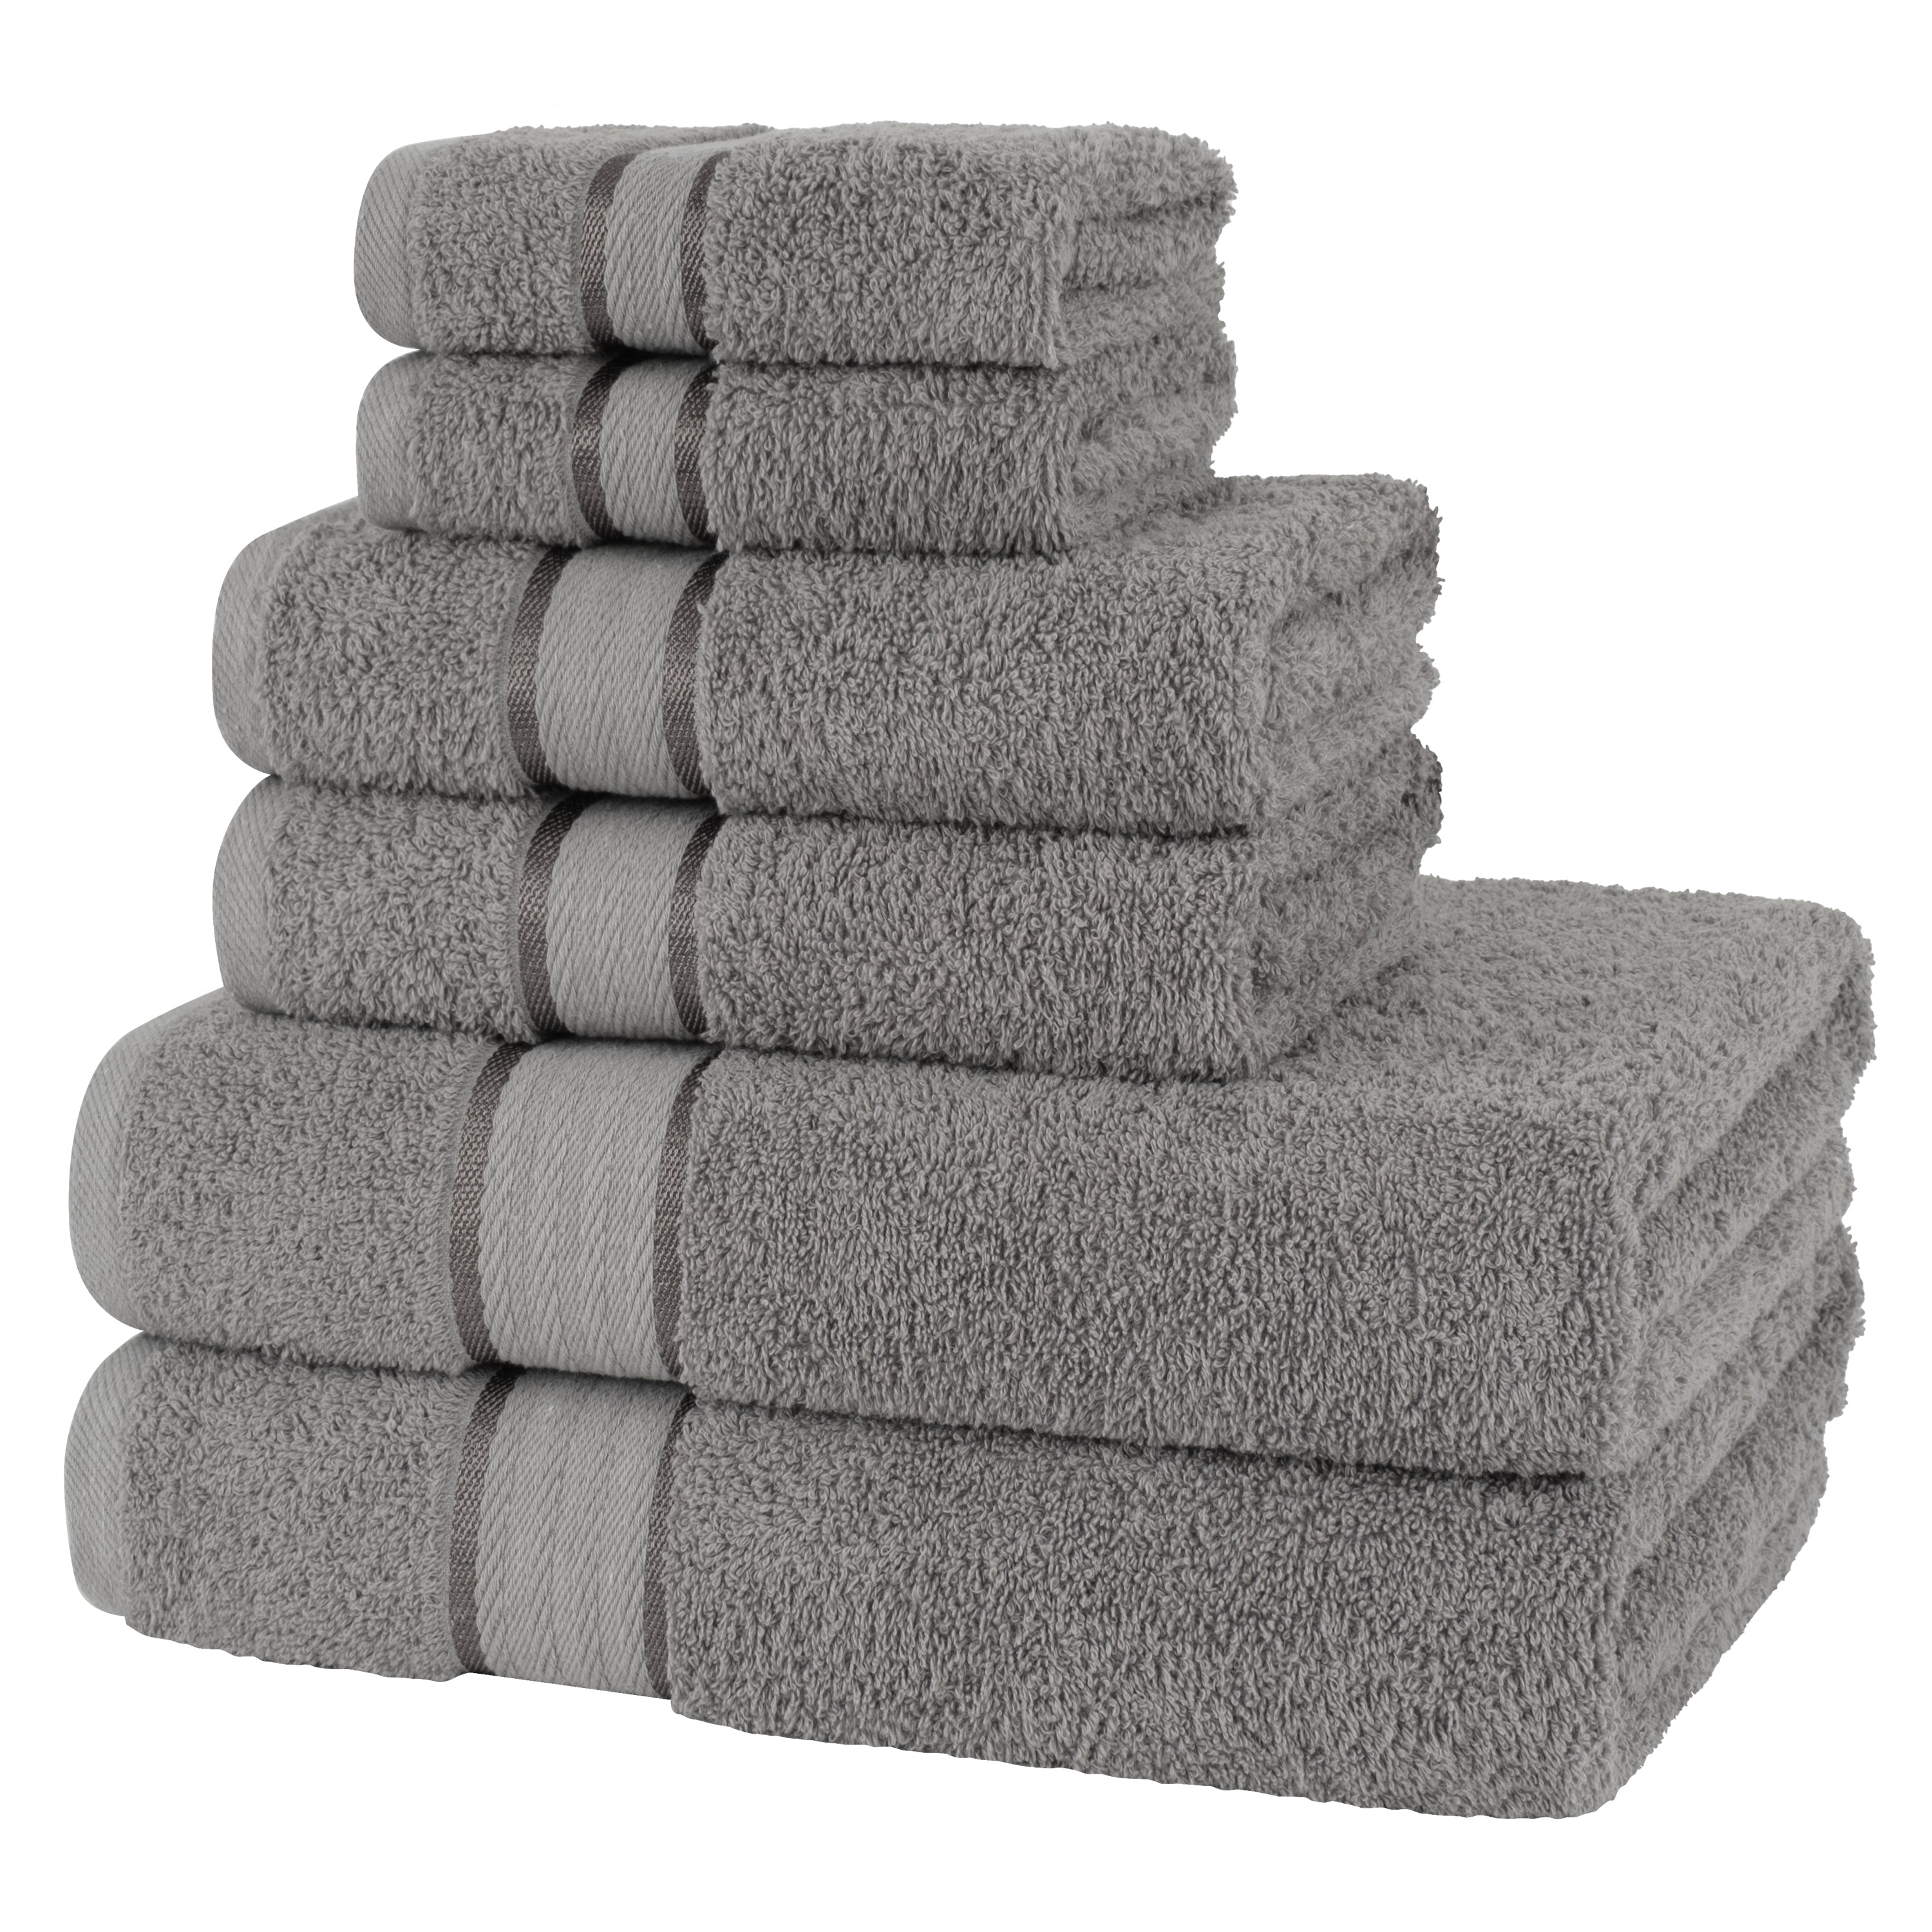 American Soft Linen - Salem 6 Piece Turkish Cotton Luxury Towel Set - Gray - 3